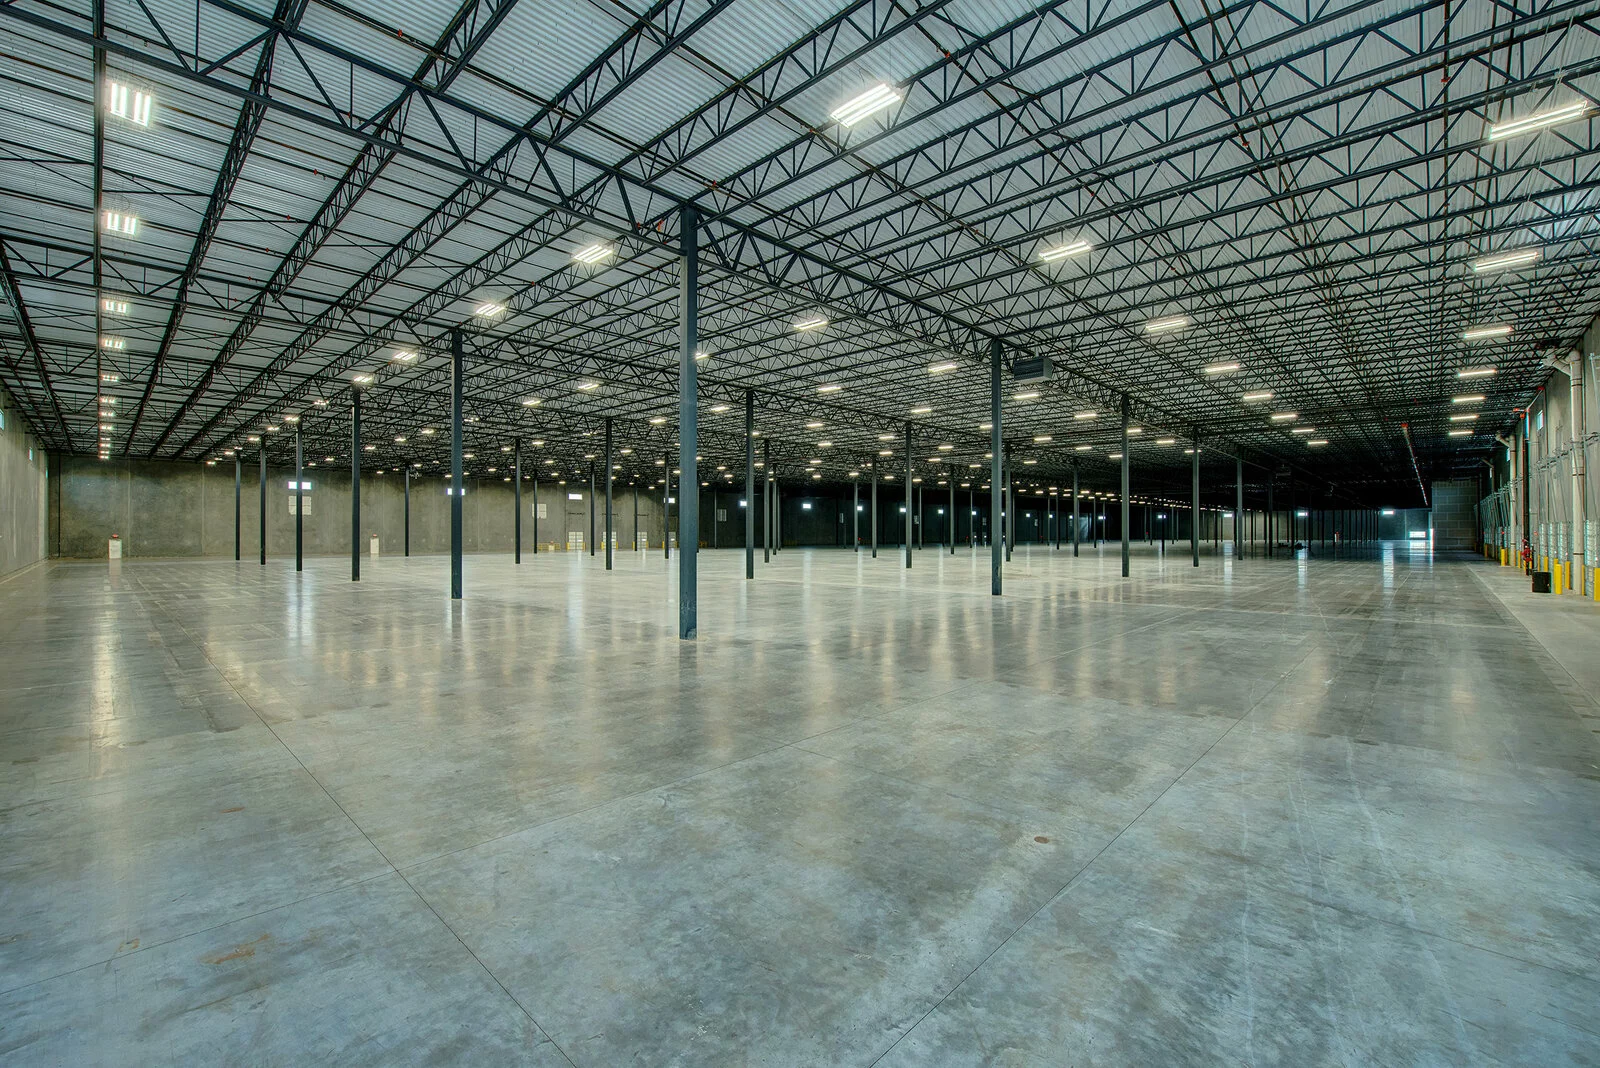 Interior Building warehouse, concrete floors, vast empty space.